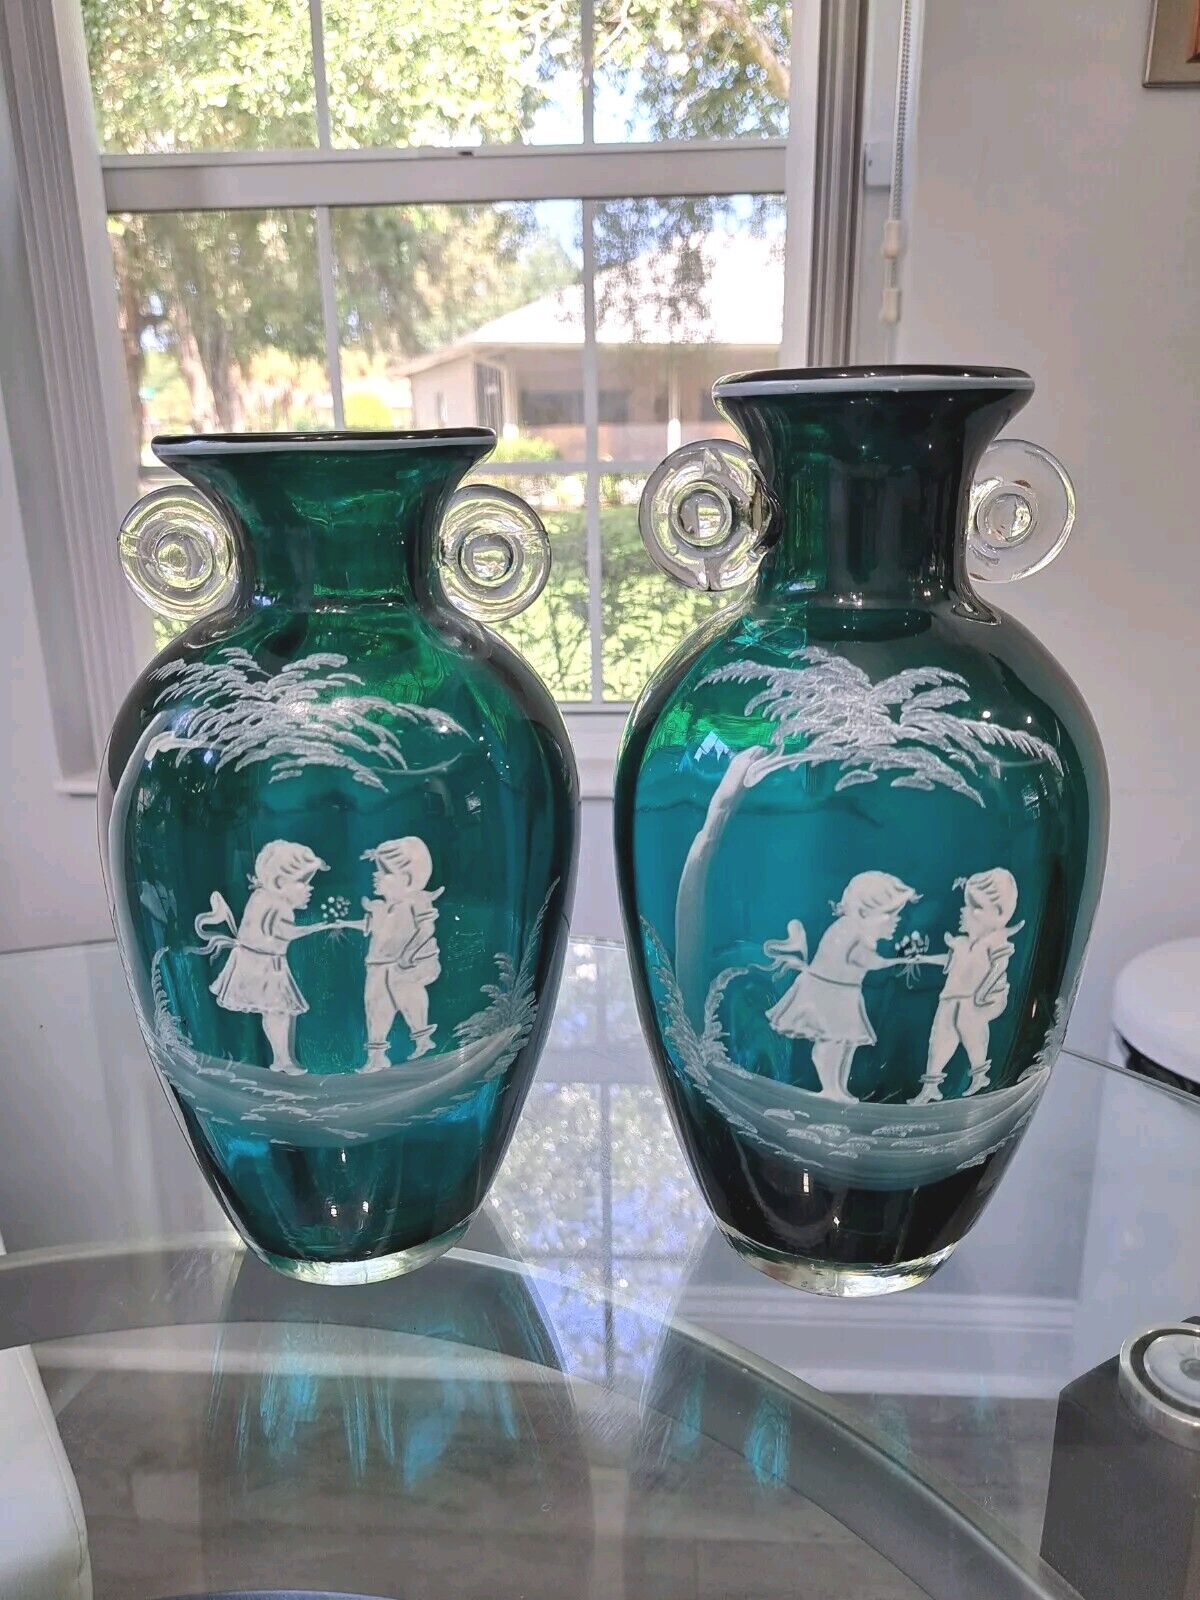 2 Vintage Teal Blown Glass Vase Amphora Style Scroll Hand-Painted Children Scene